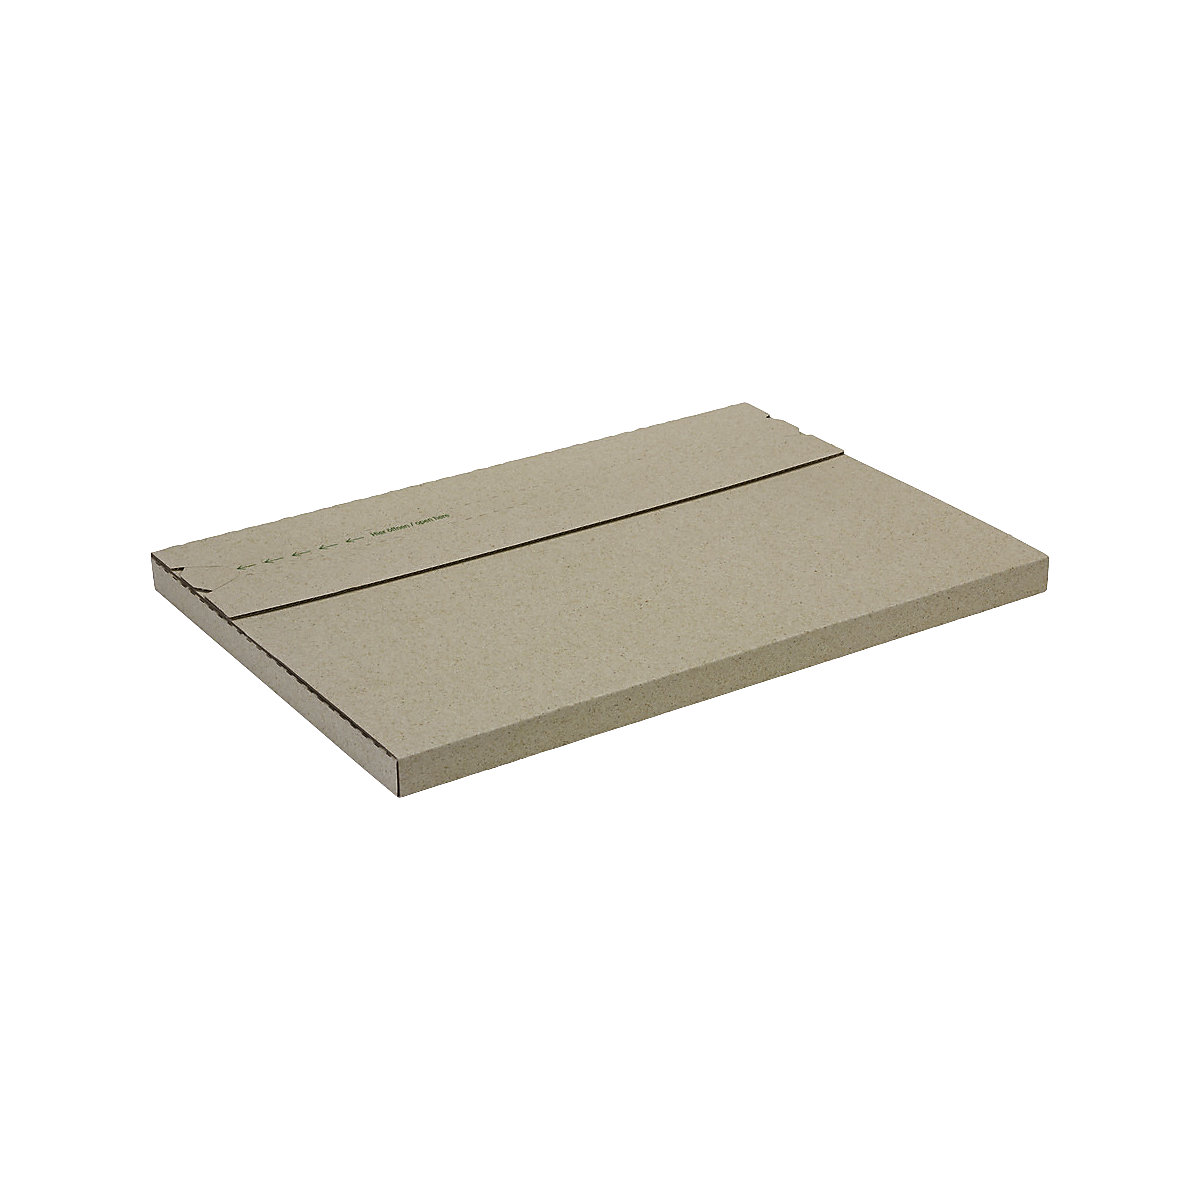 Graspapier-Flachpack terra, selbstklebend, Innen-LxBxH 349 x 246 x 15 mm, ab 20 Stk